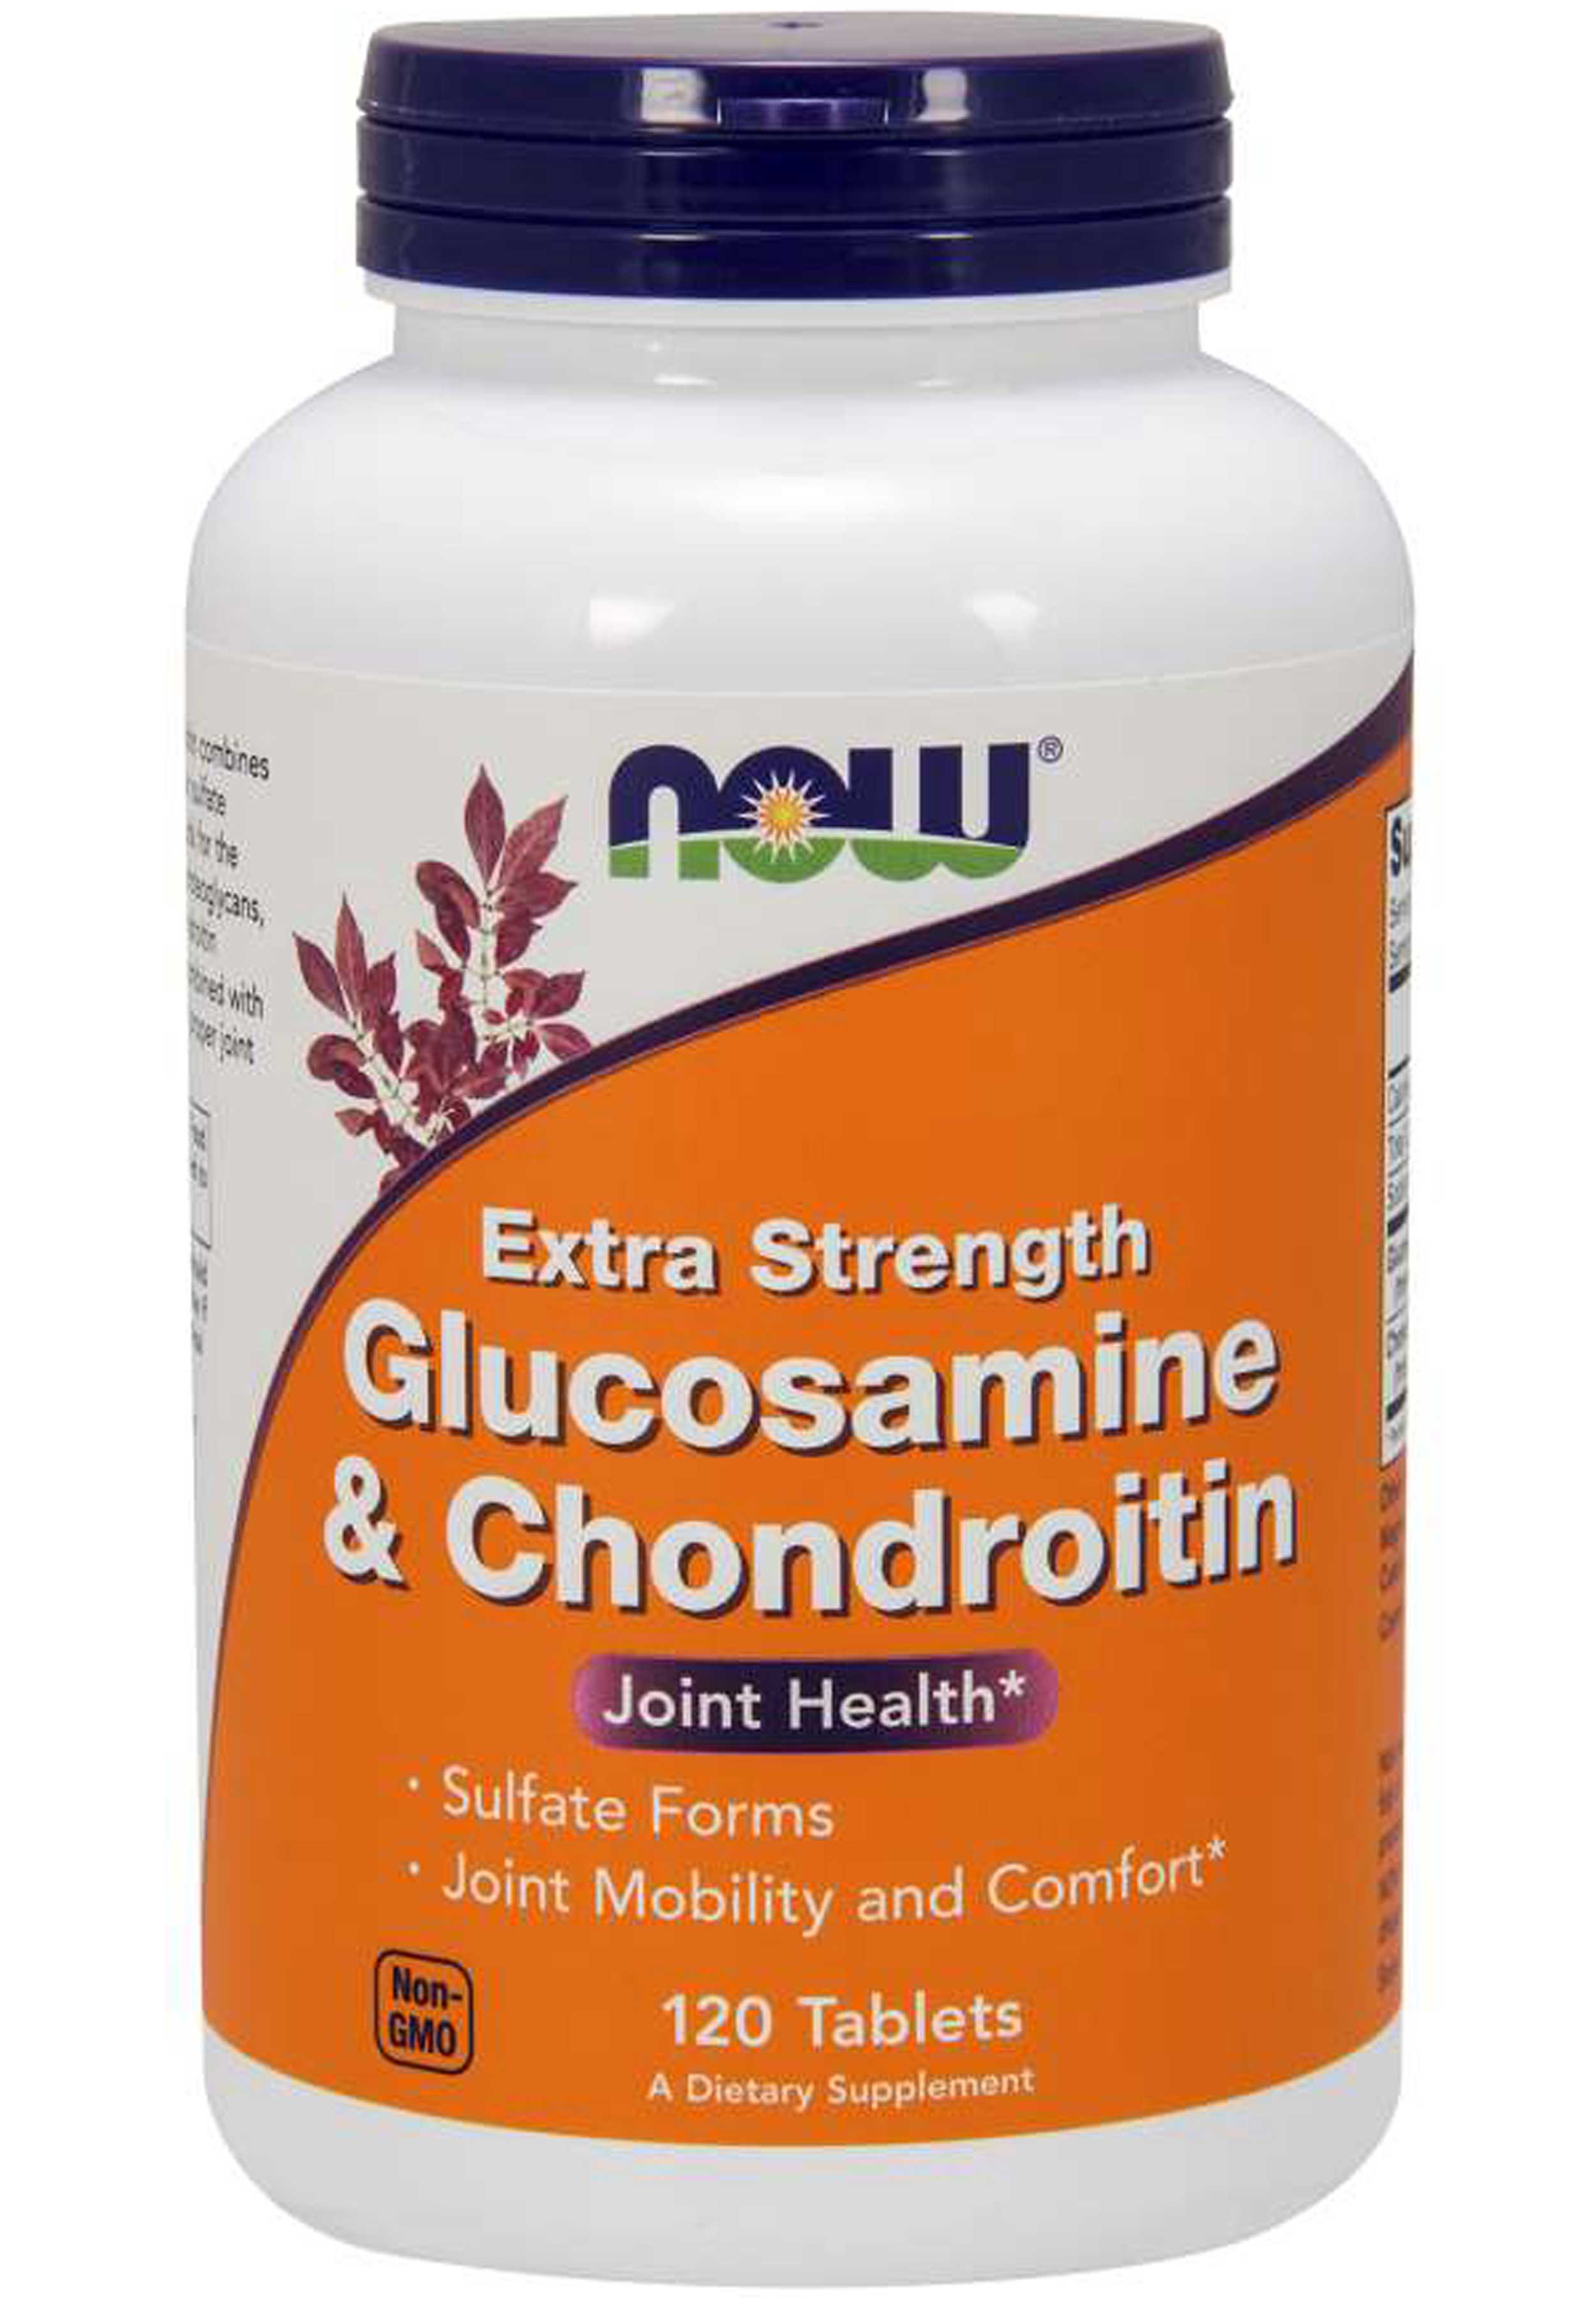 NOW Glucosamine & Chondroitin Extra Strength